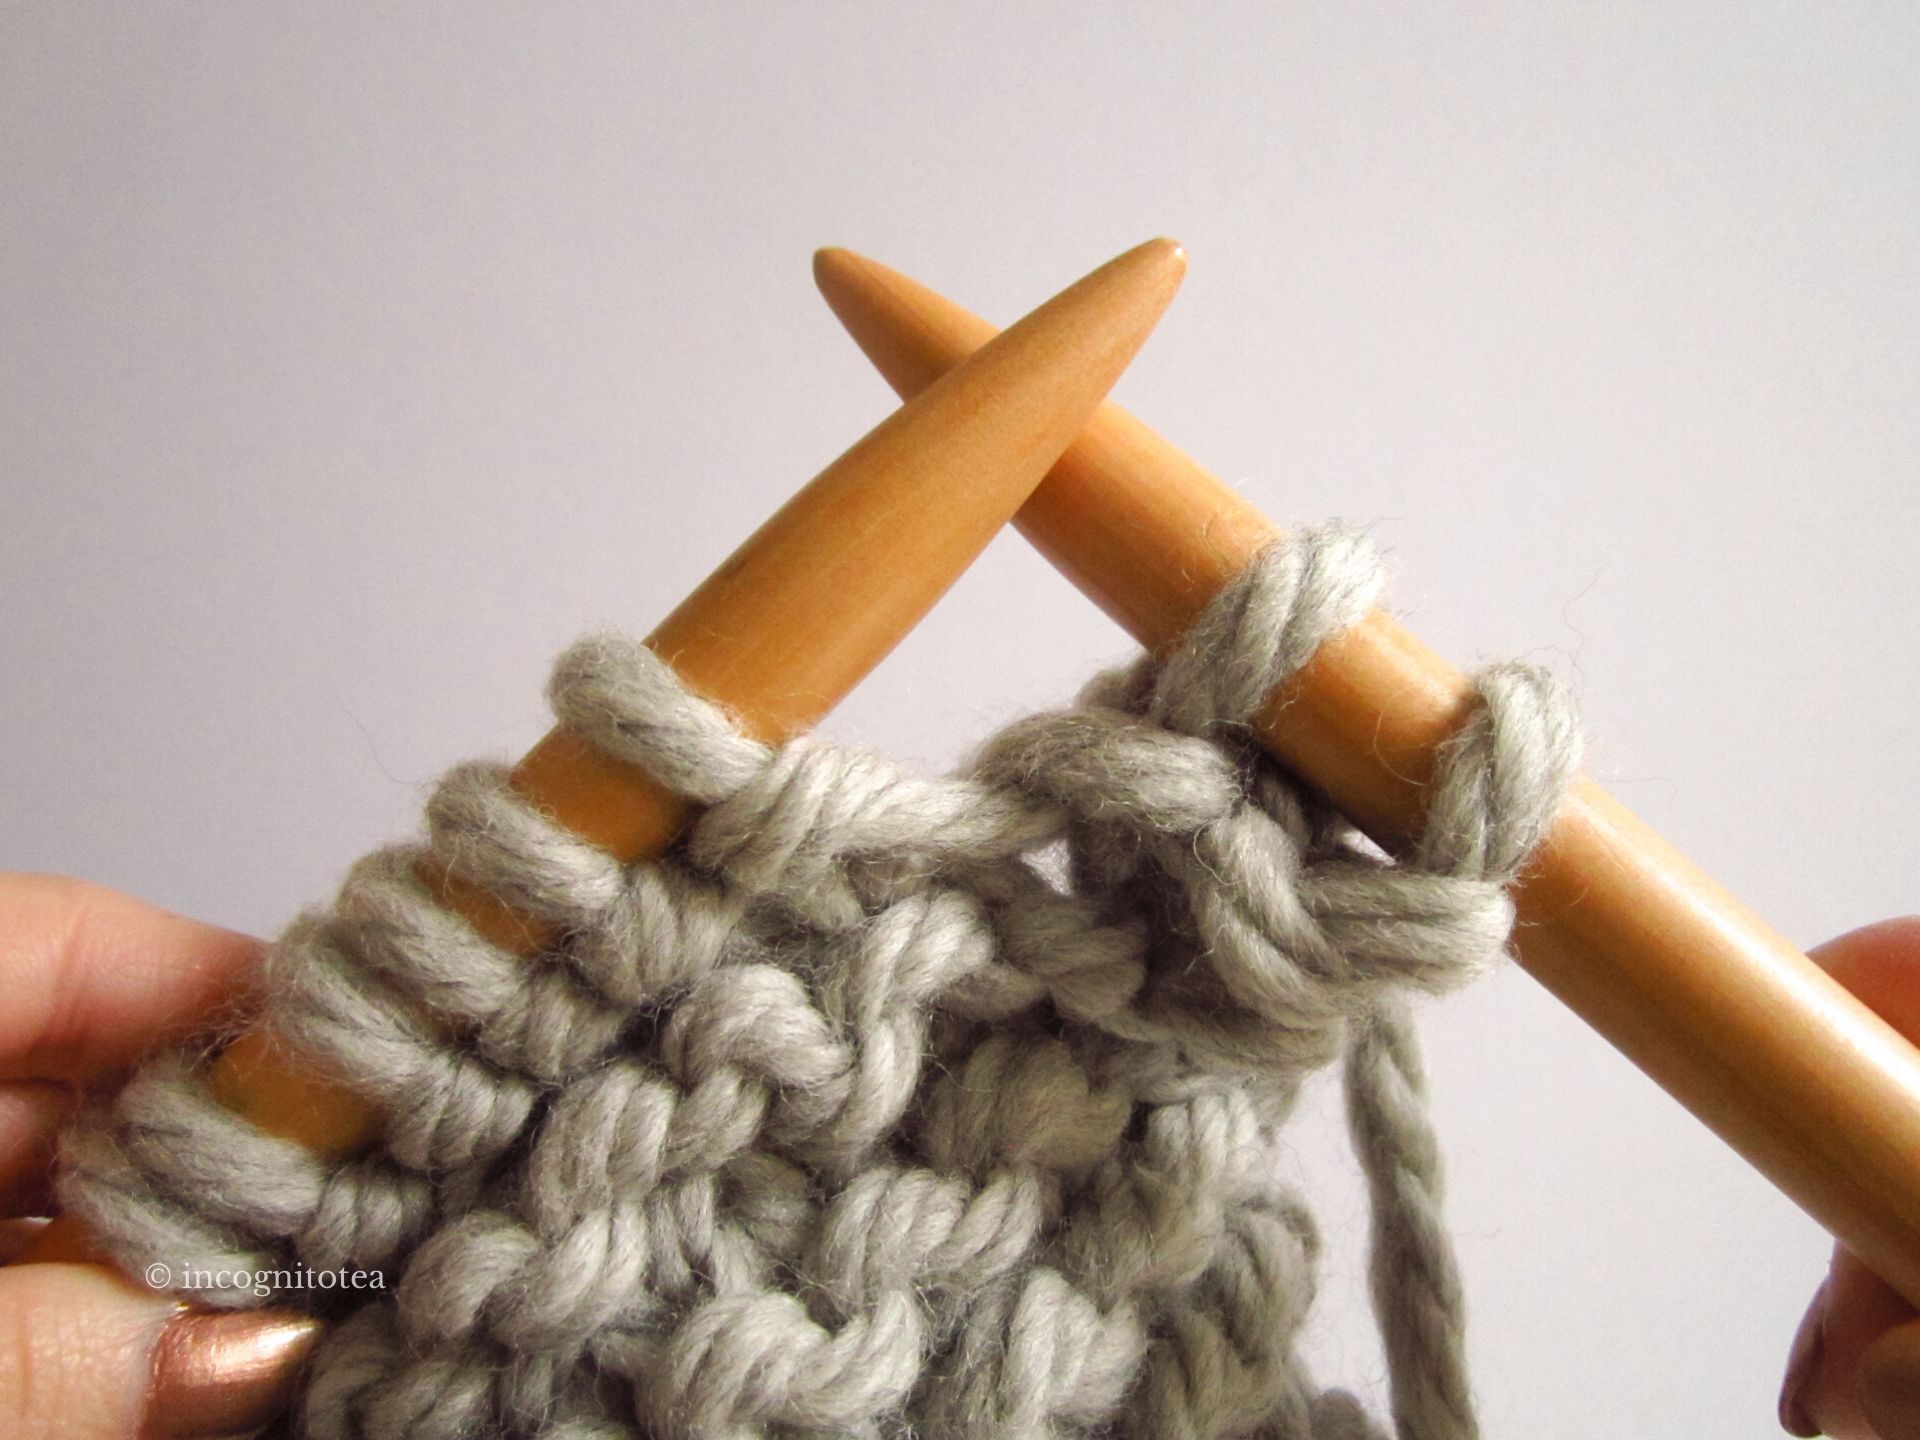 Knitting Basics How to cast off knitting